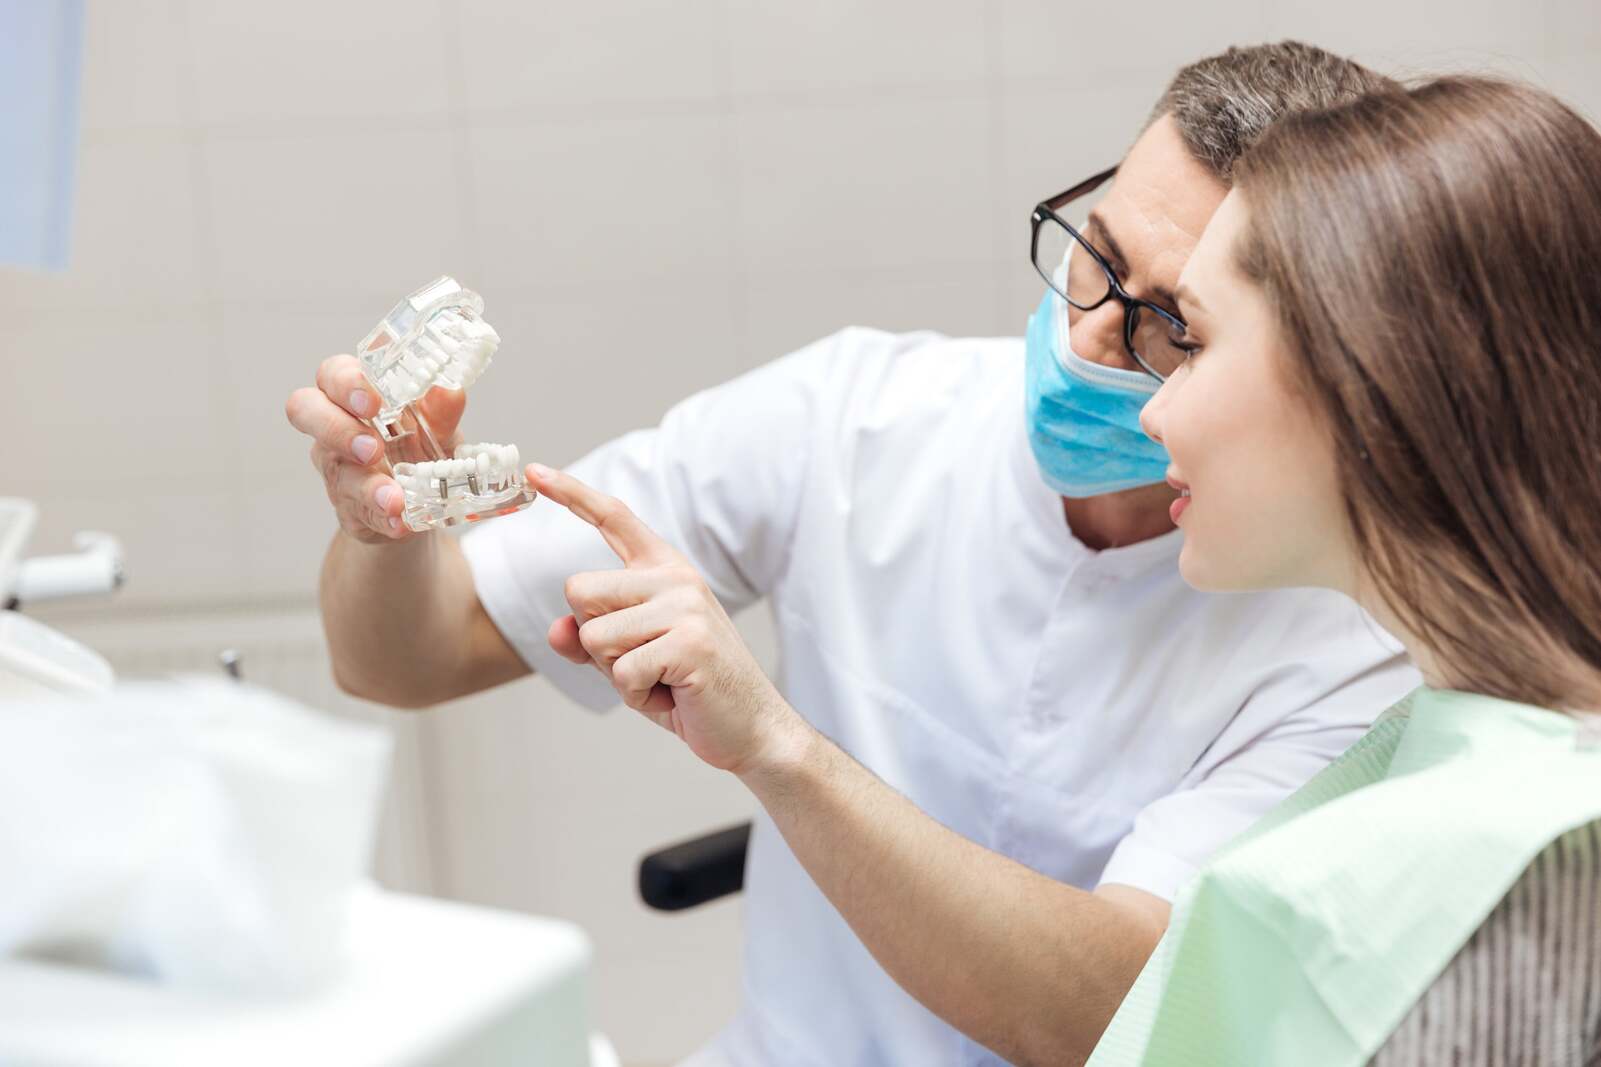 does a broken denture count as a dental emergency?